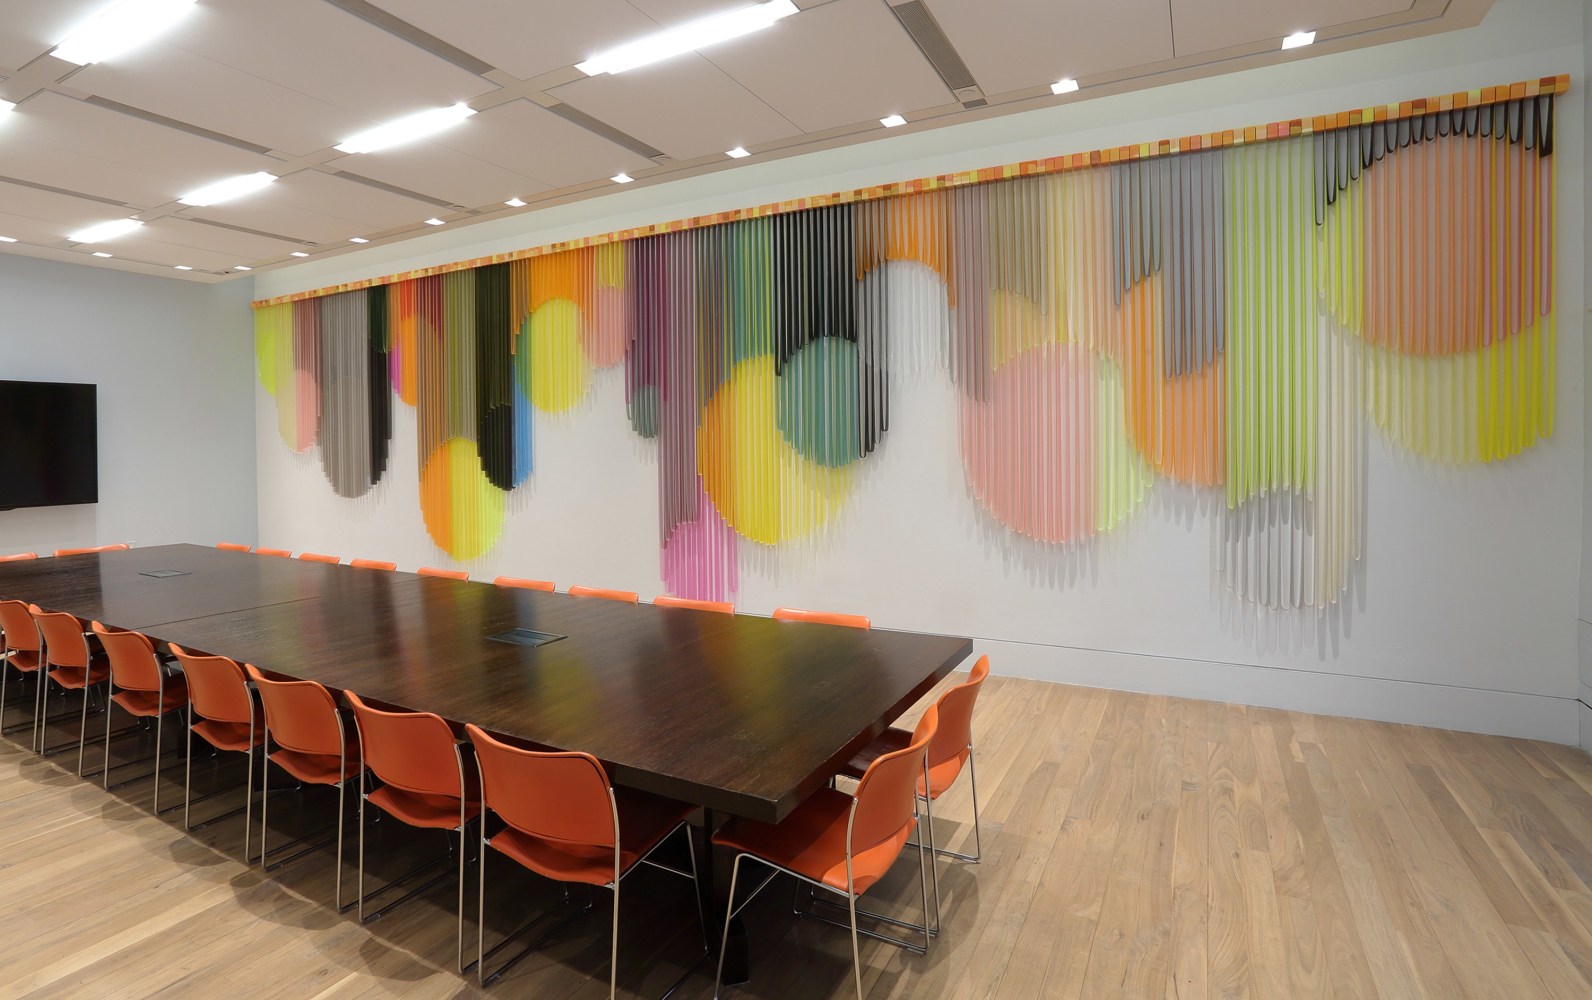 Eva LeWitt
Untitled (Fish House), 2019
Foam, latex and plastic
132 x 2 3/4 x 444 inches
(335.3 x 7 x 1127.8 cm)